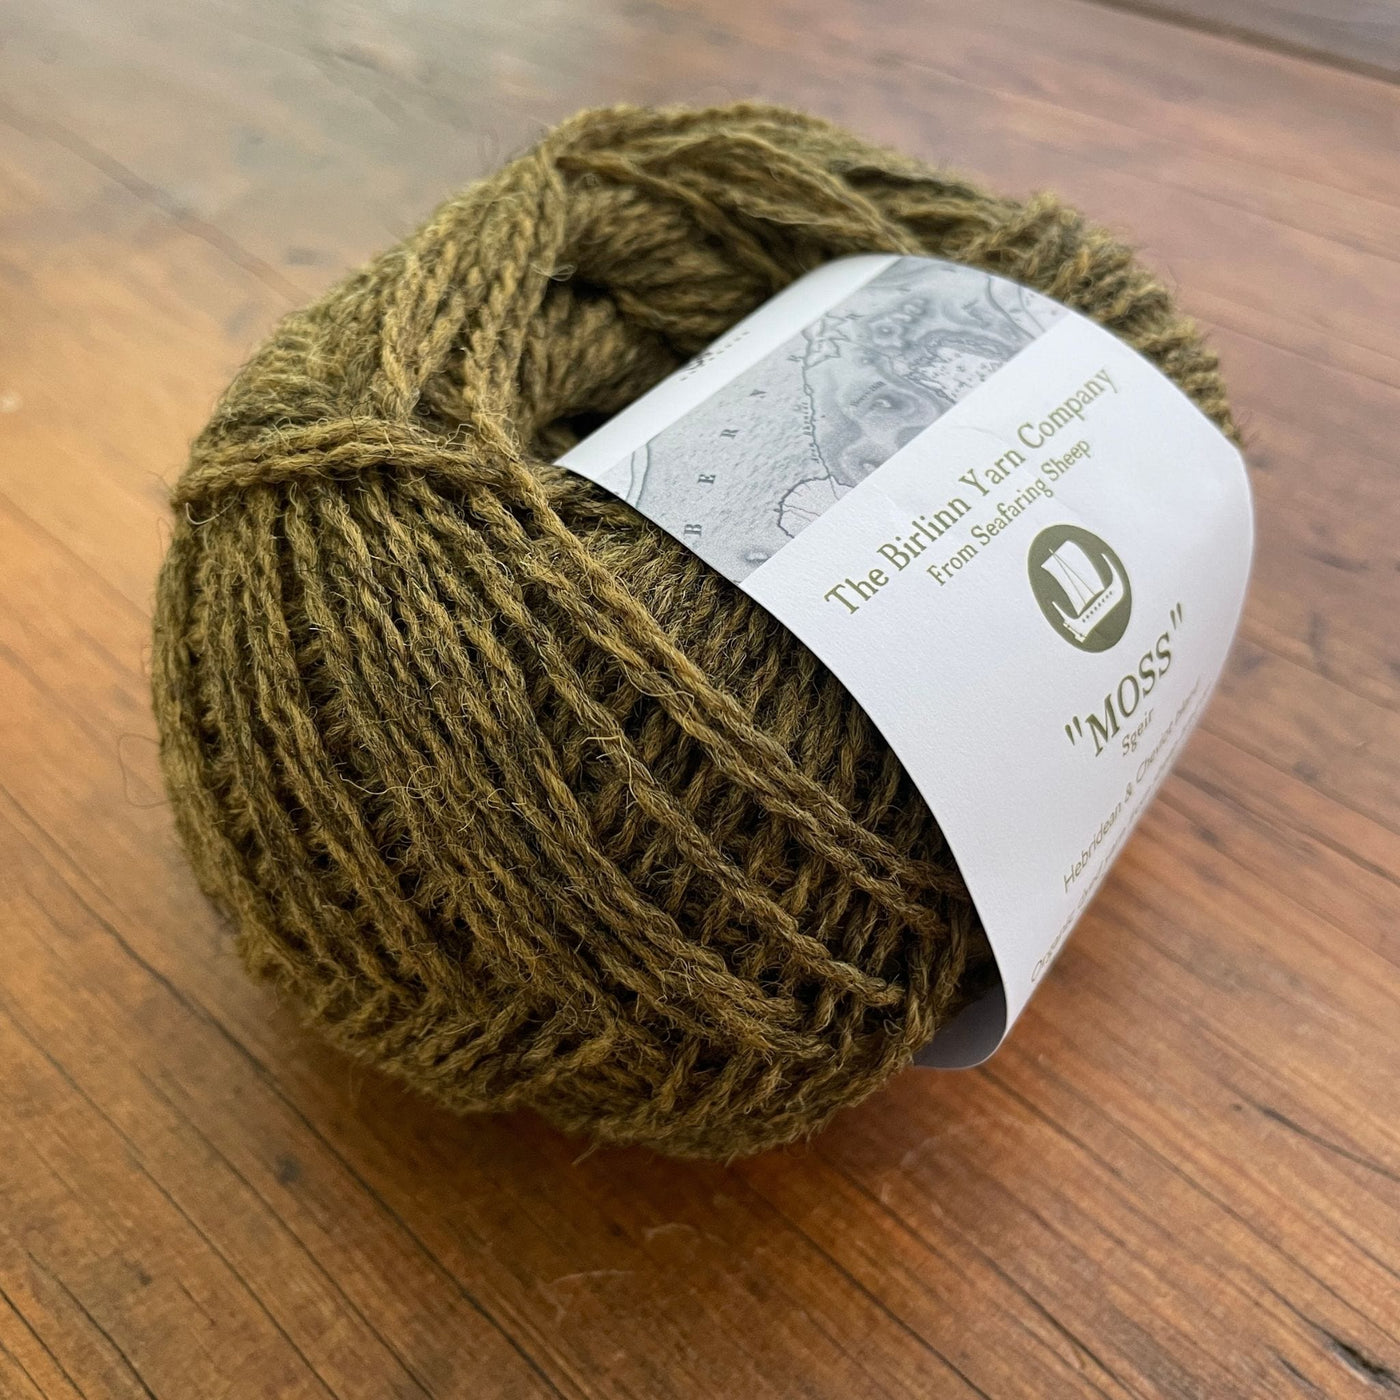 Birlinn Yarn Company Hebridean 4ply yarn shown in Moss (yellow/green))